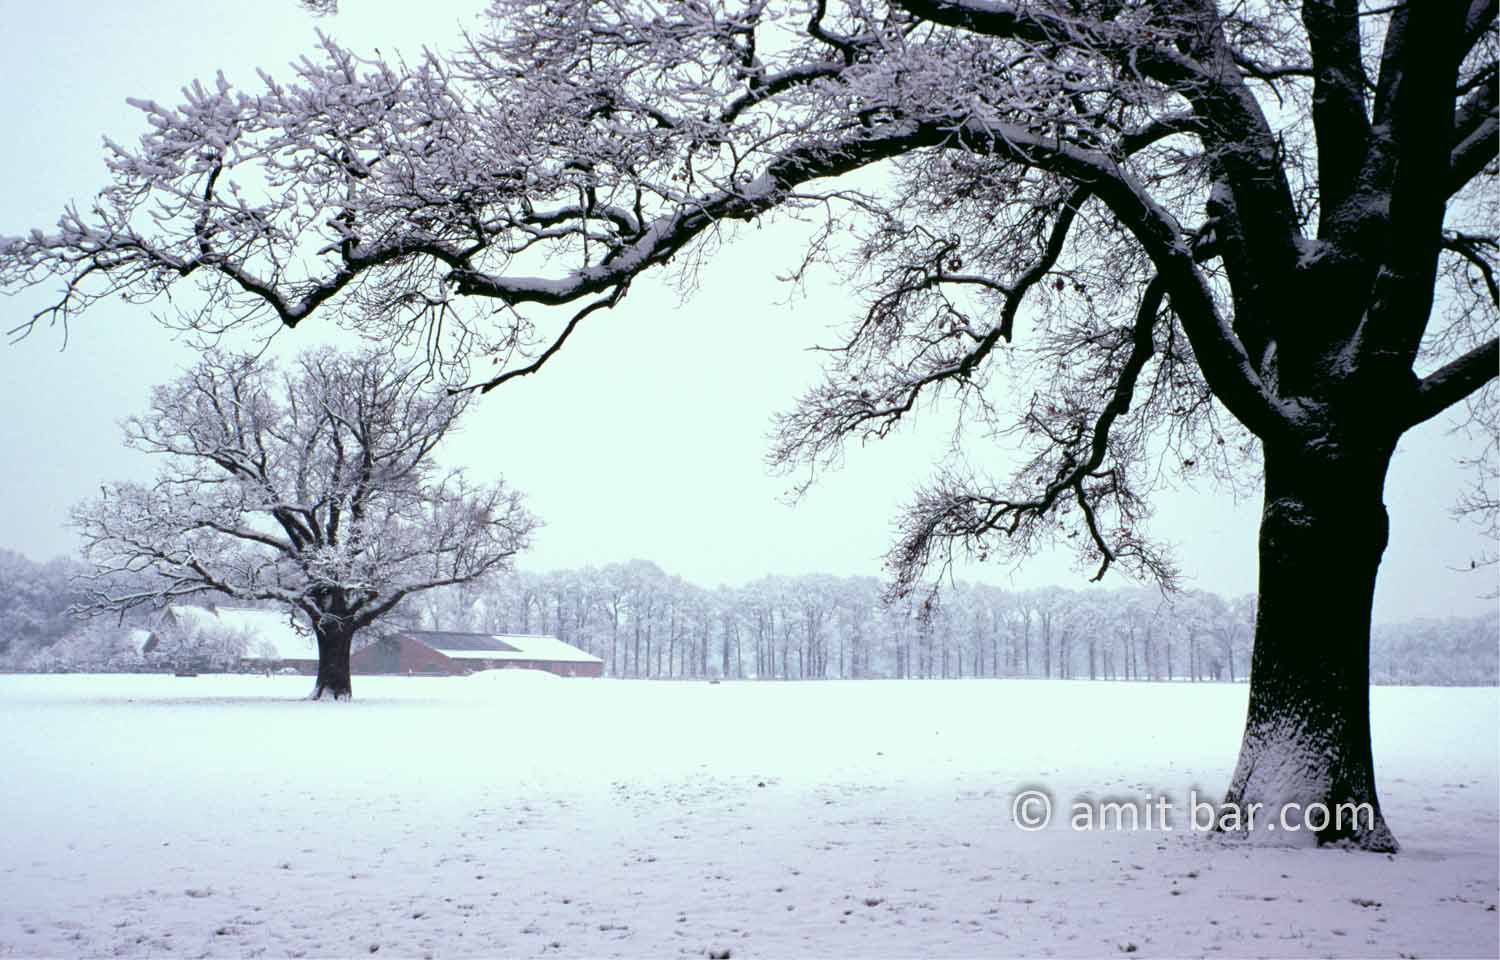 Snowy farmhouse with two oaks II: Snowy landscape at Slangenburg, Doetinchem, The Netherlands